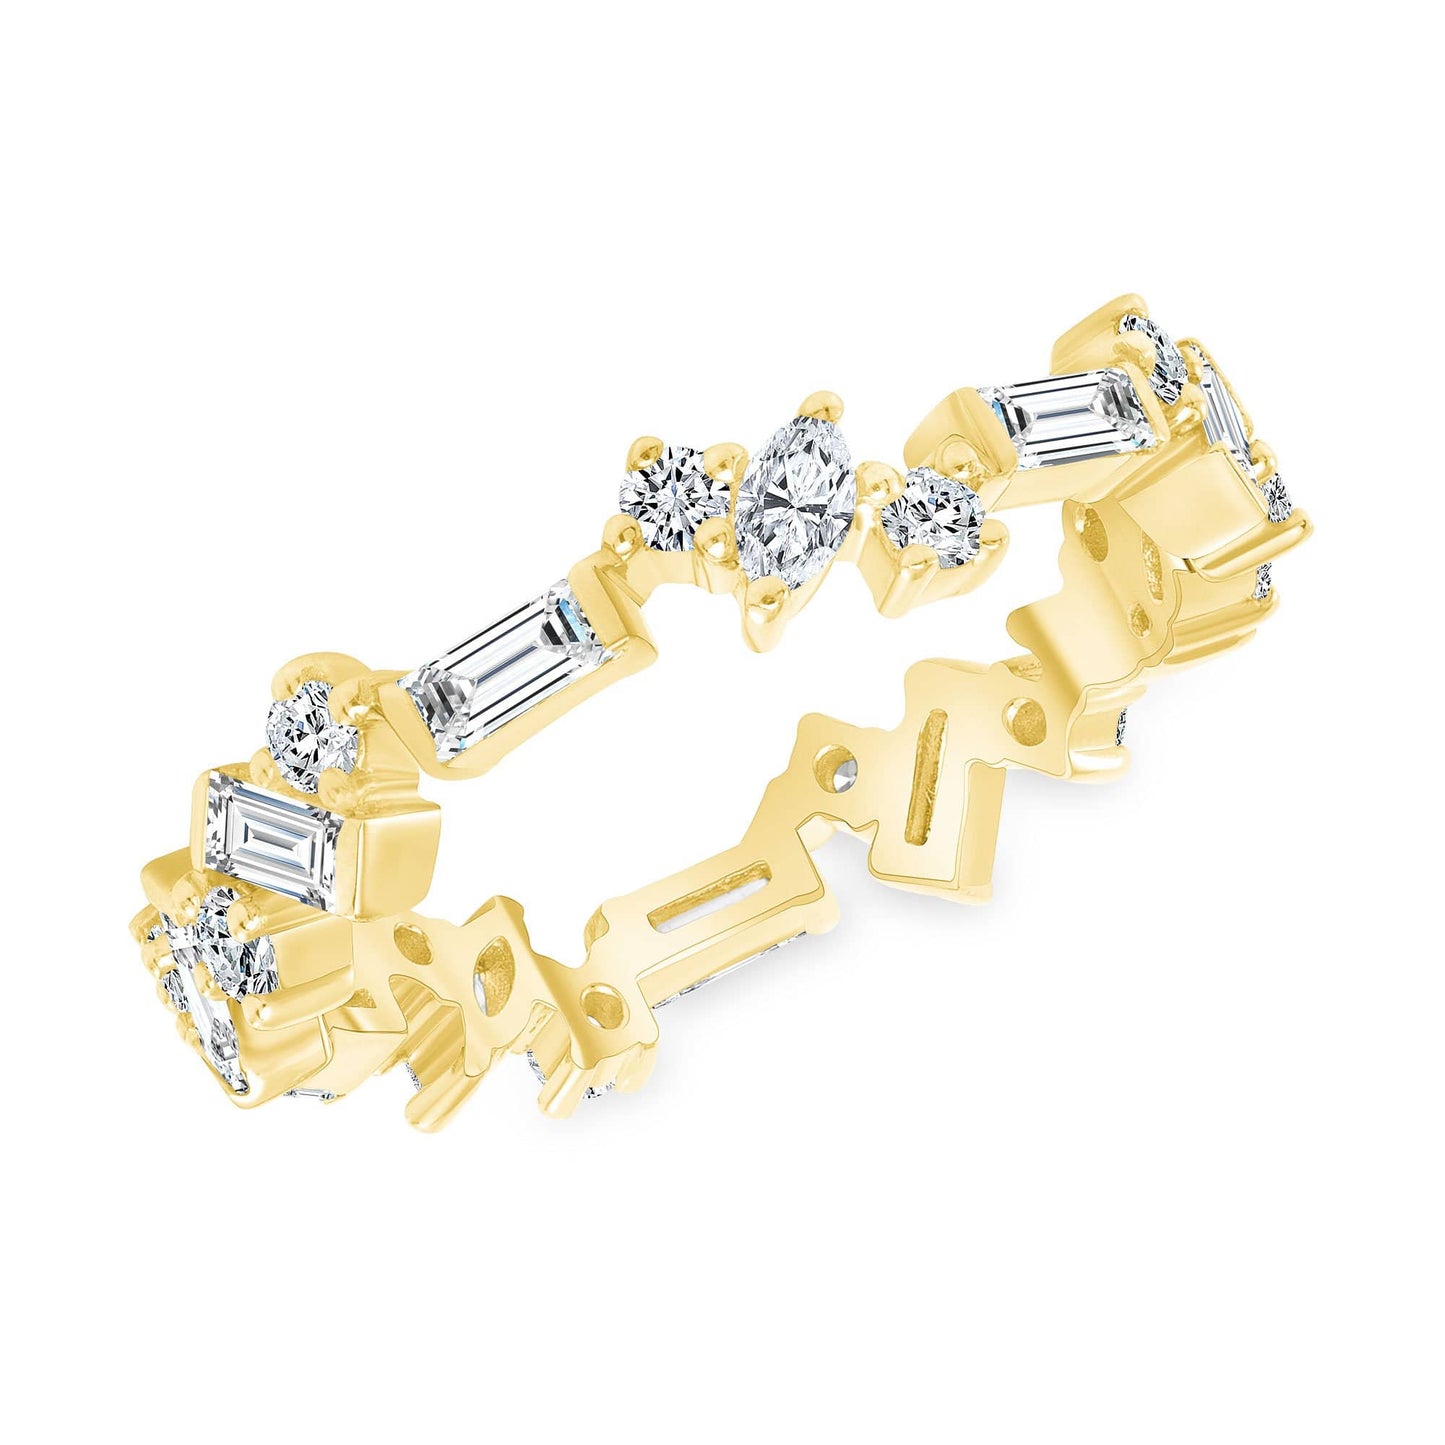 Diamond Cut Braid Chain Necklace – Carrie Elizabeth